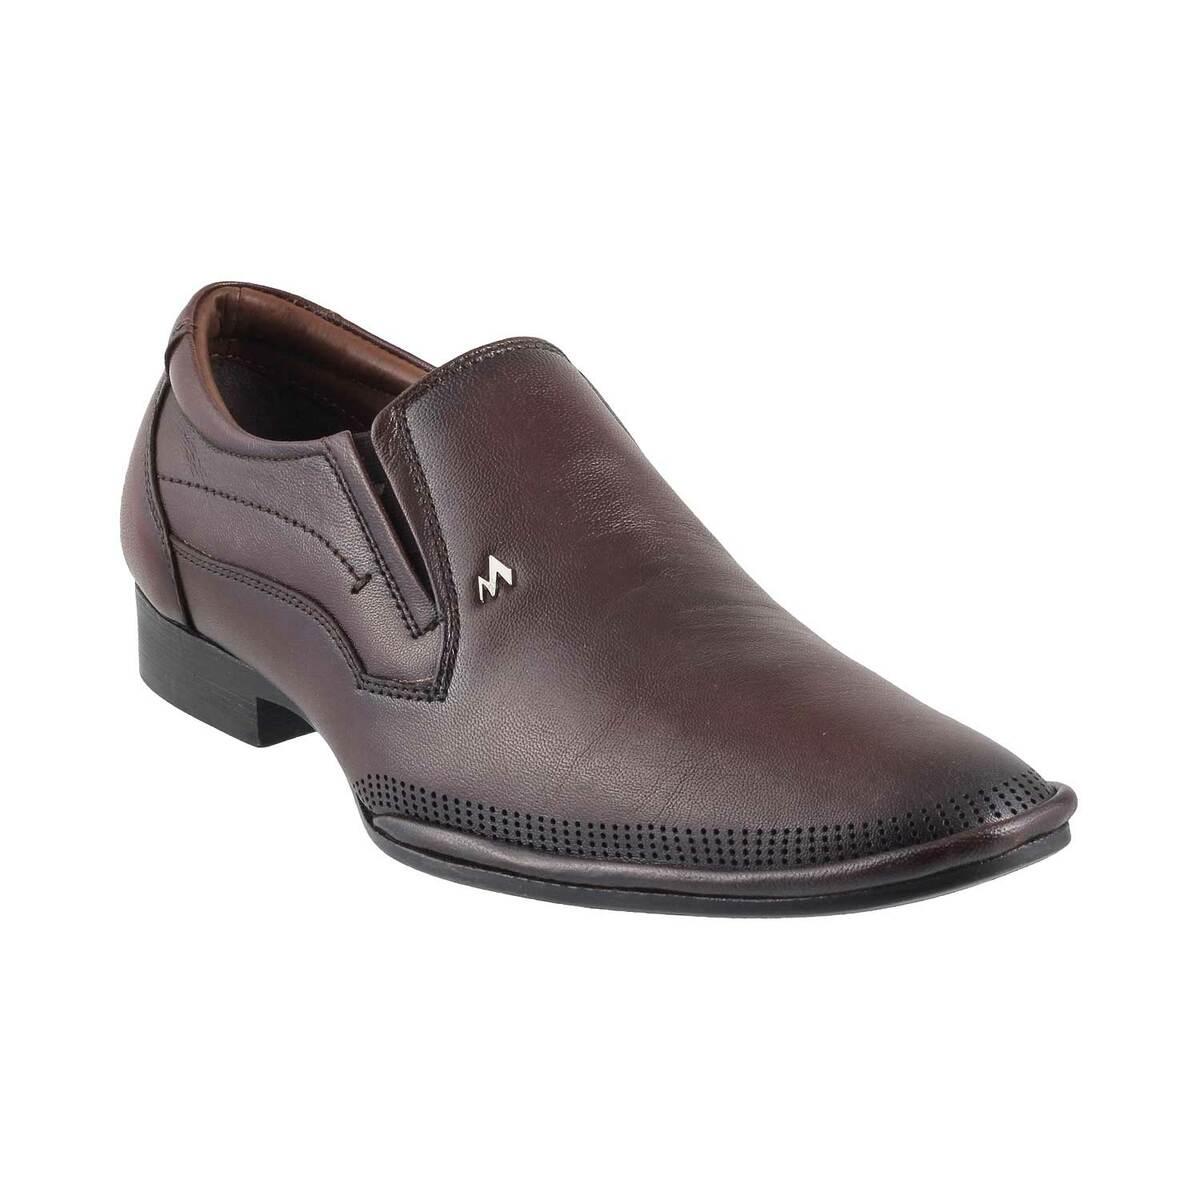 Buy Men Maroon Formal Moccasin Online | SKU: 19-5017-44-40-Metro Shoes